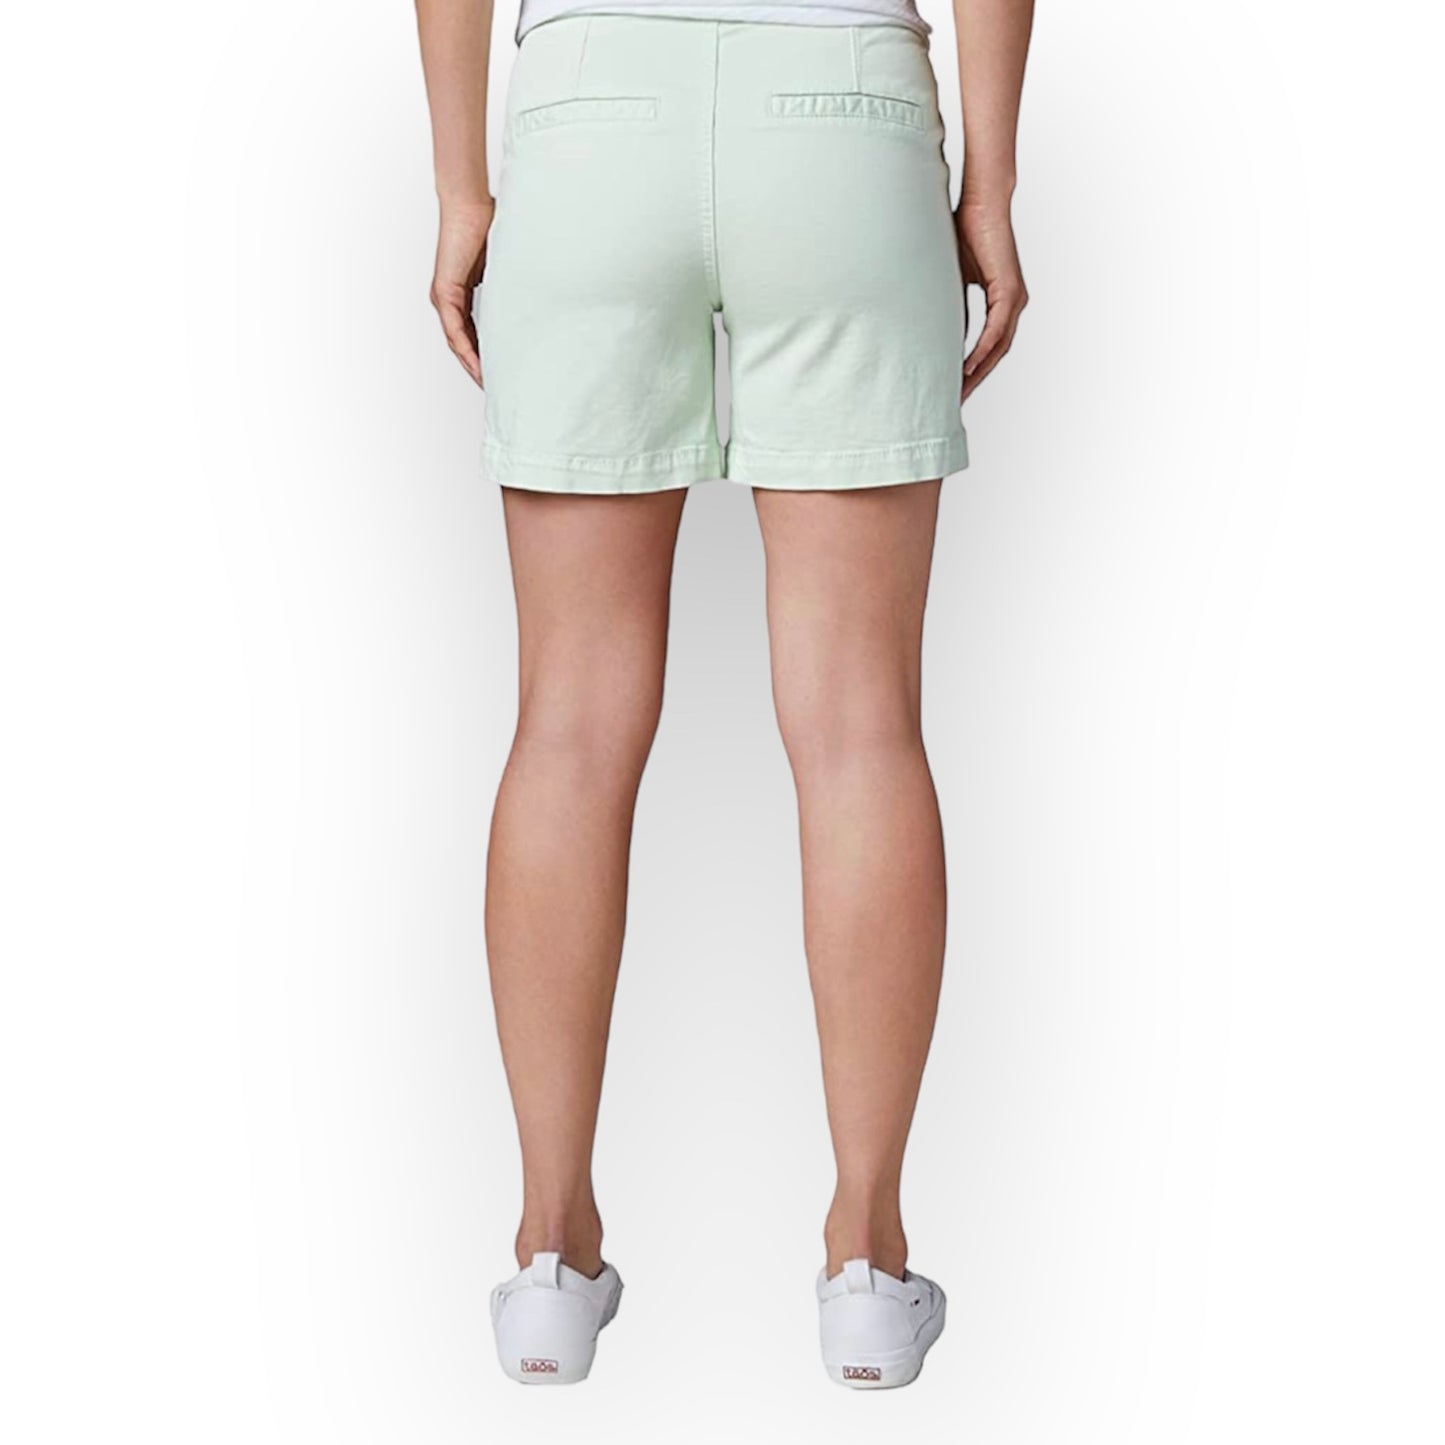 GRACIE Mint Green Slims Streak Classic Fit Size 14/32 Women’s Short